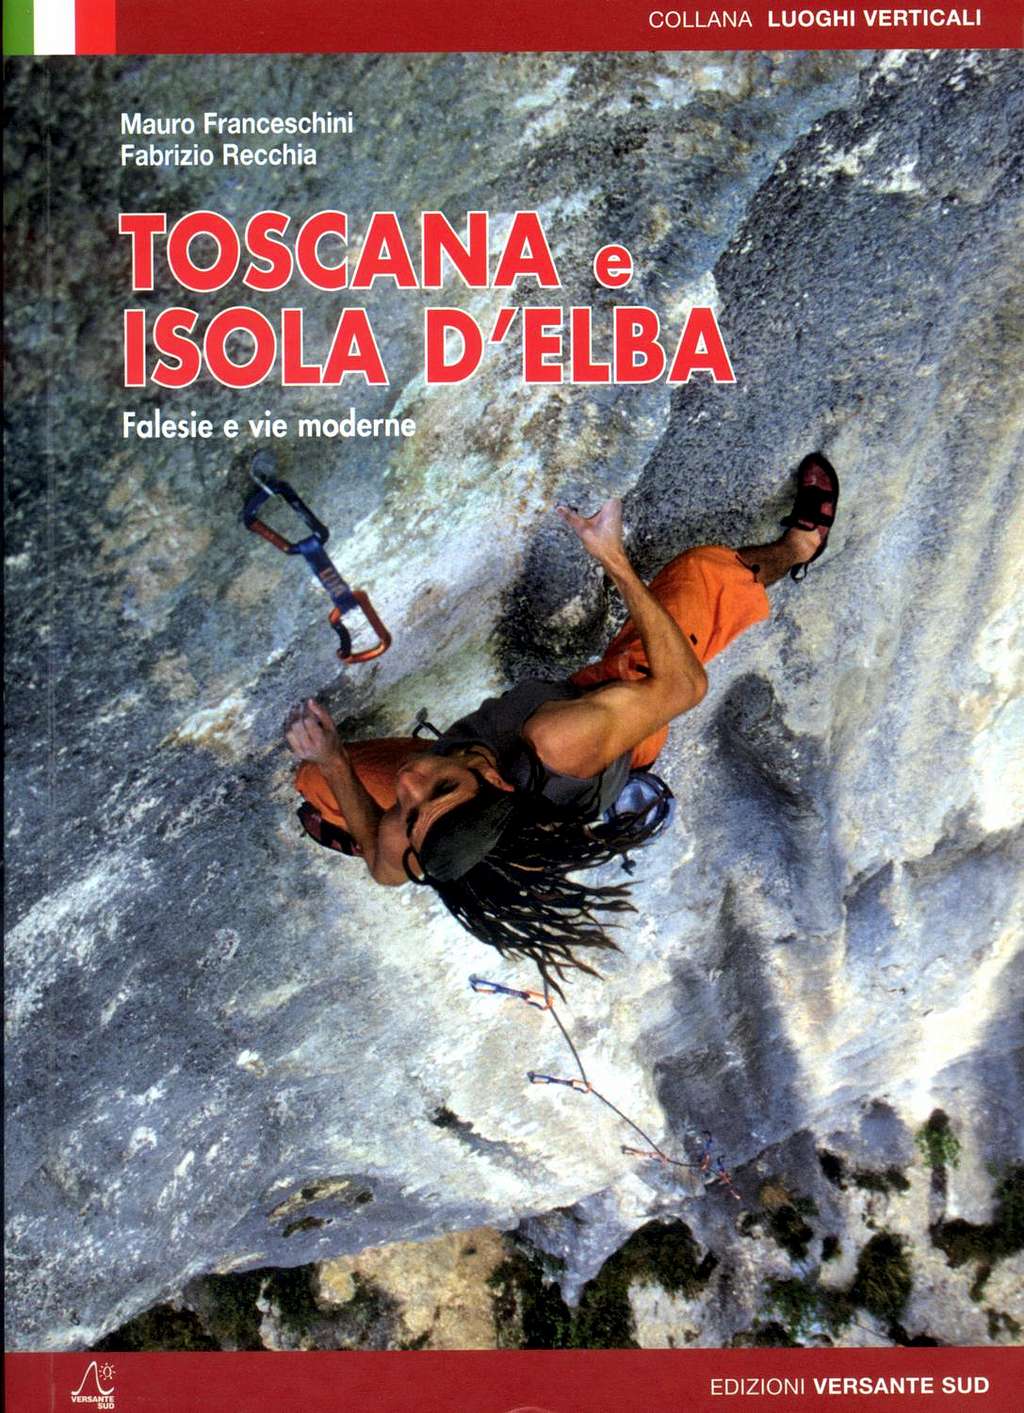 Tuscany and Elba Island new guidebook